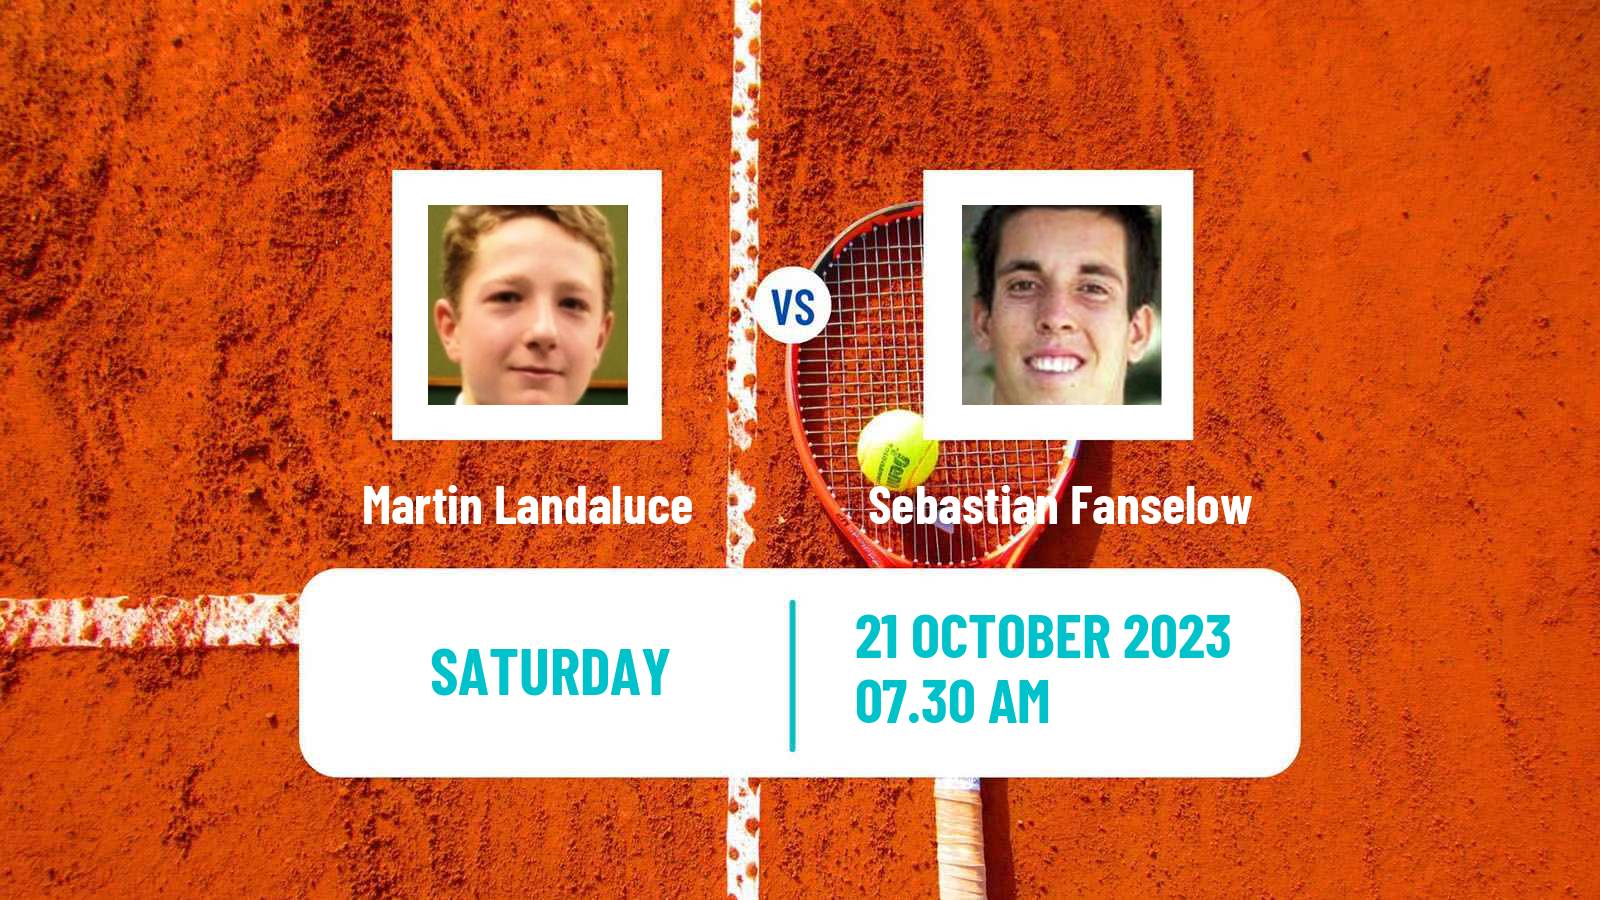 Tennis ITF M25 Tavira 2 Men Martin Landaluce - Sebastian Fanselow